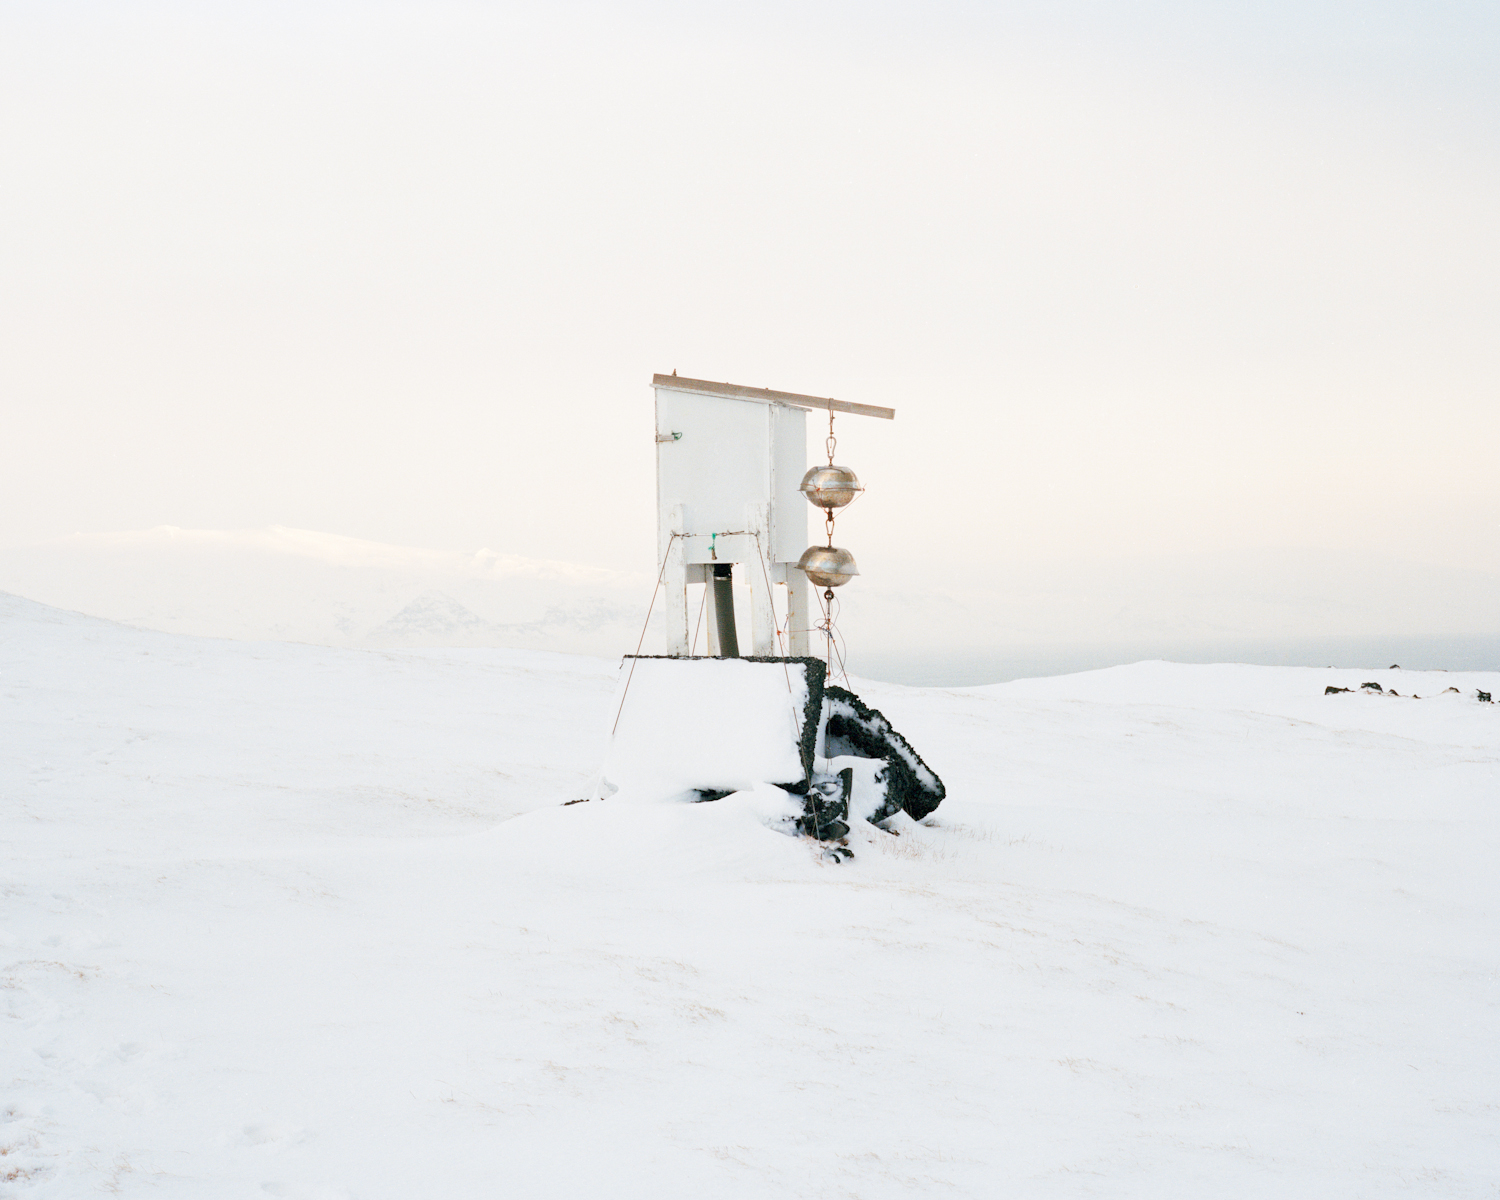  Stórhöfði Weather Station #1, Vestmannaeyjar, 2015.  Project Statement  